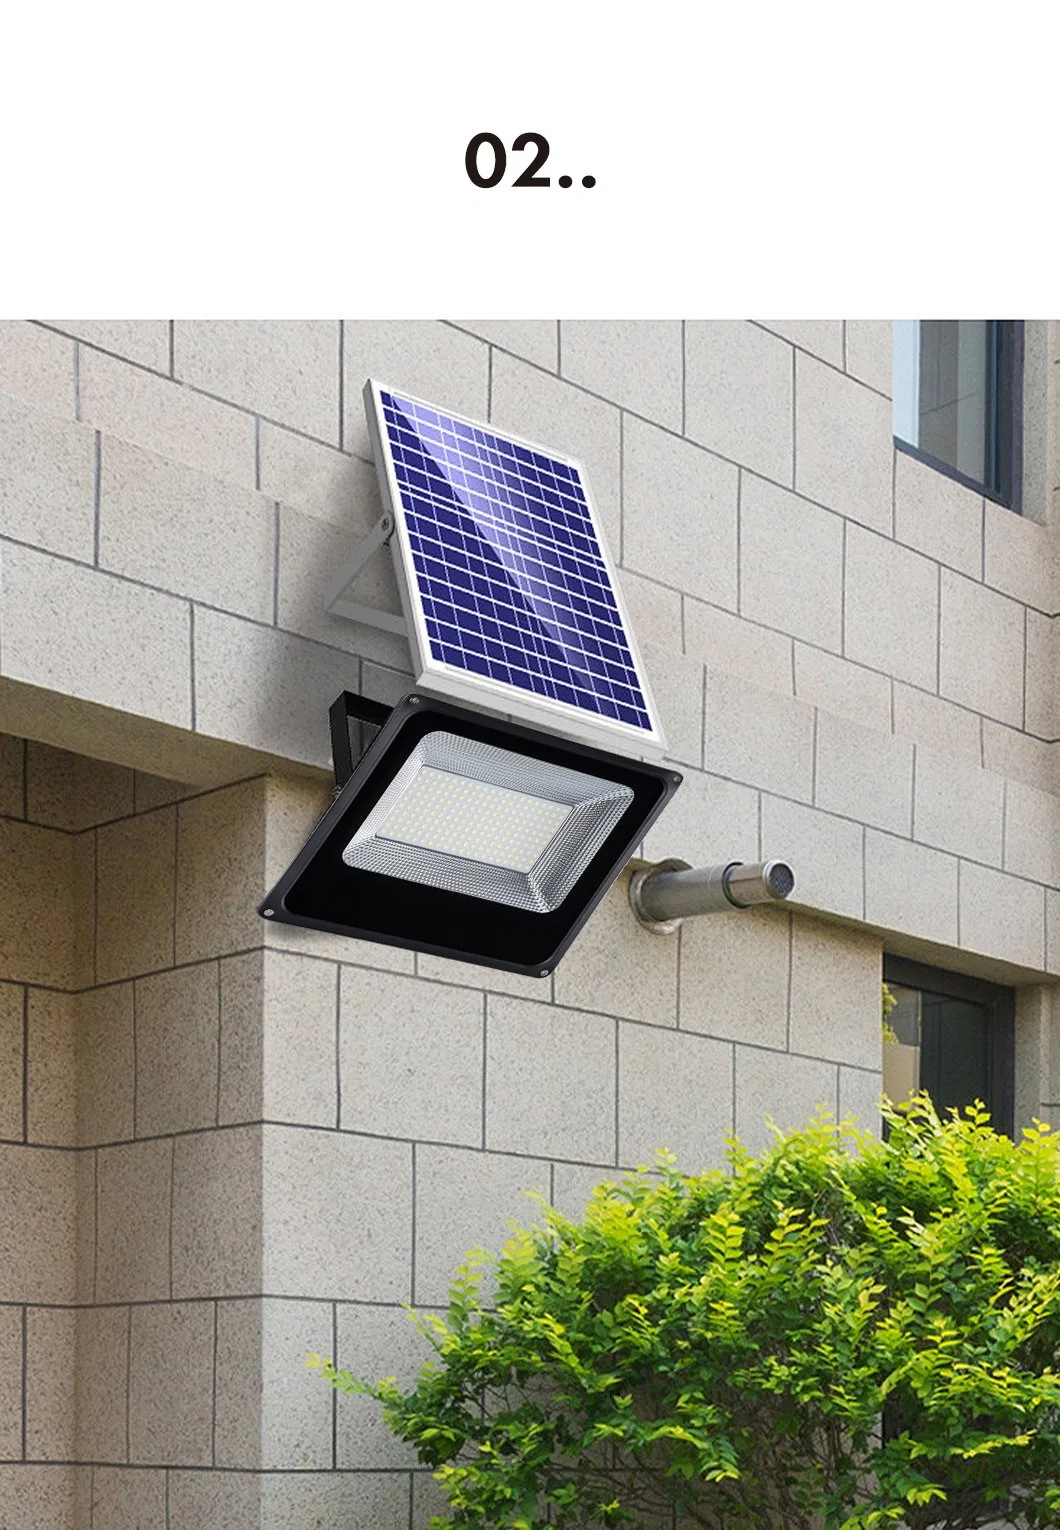 Solar Sentry Illuminating Security with Eco-Friendly Floodlights Light